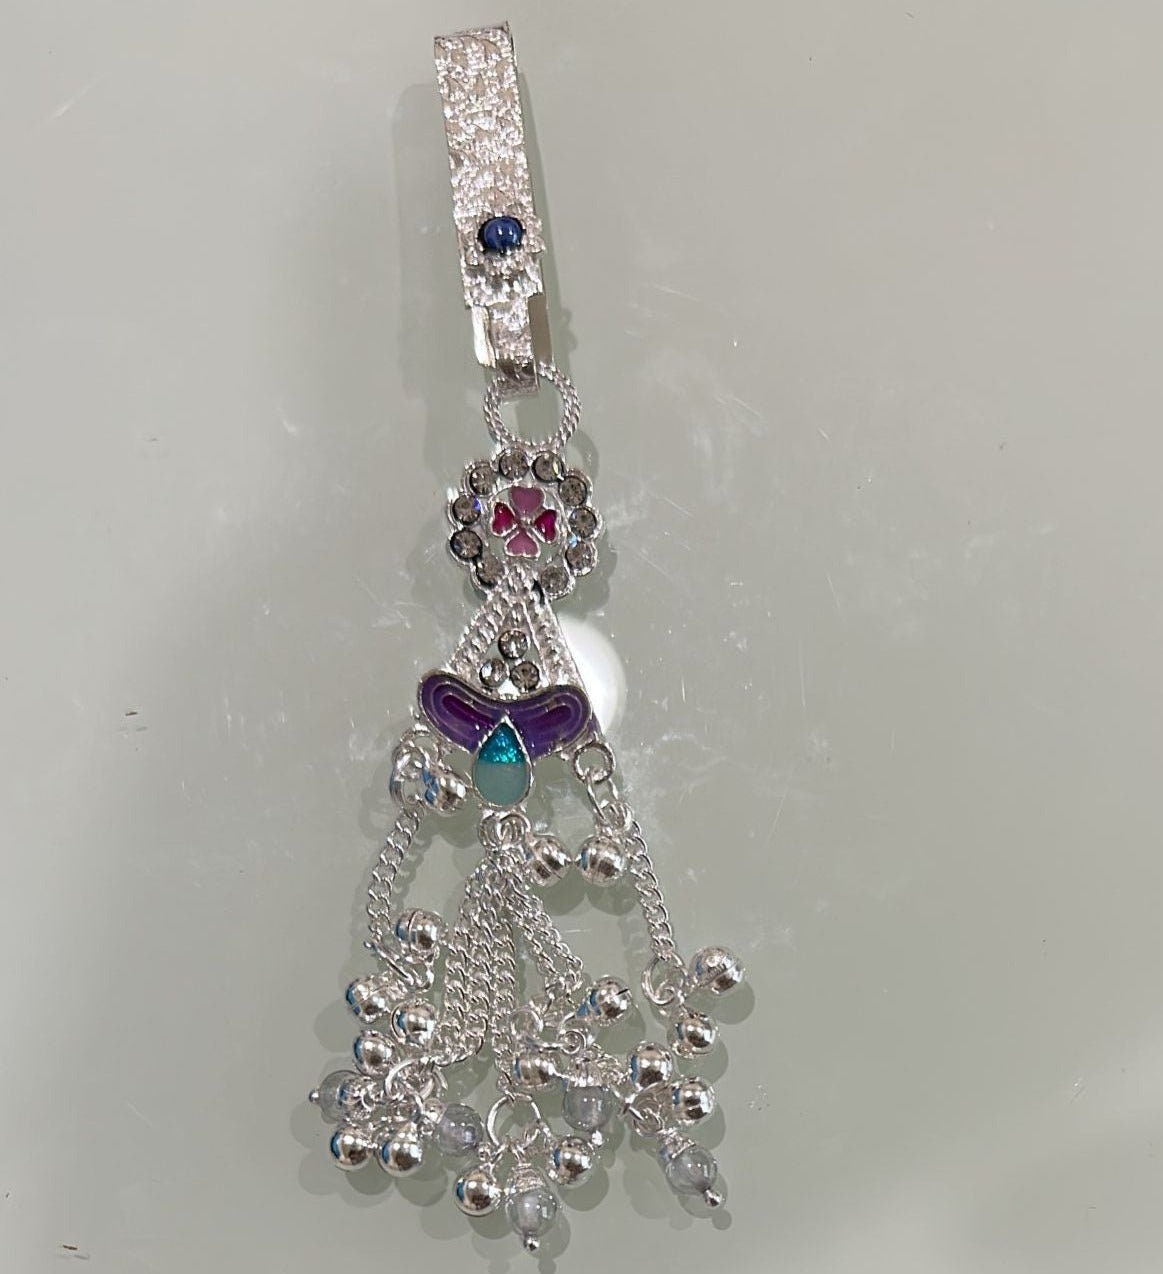 Real Sterling Silver Oxidized Bridal Waist Key Chain Holder Women Juda 5.2 in